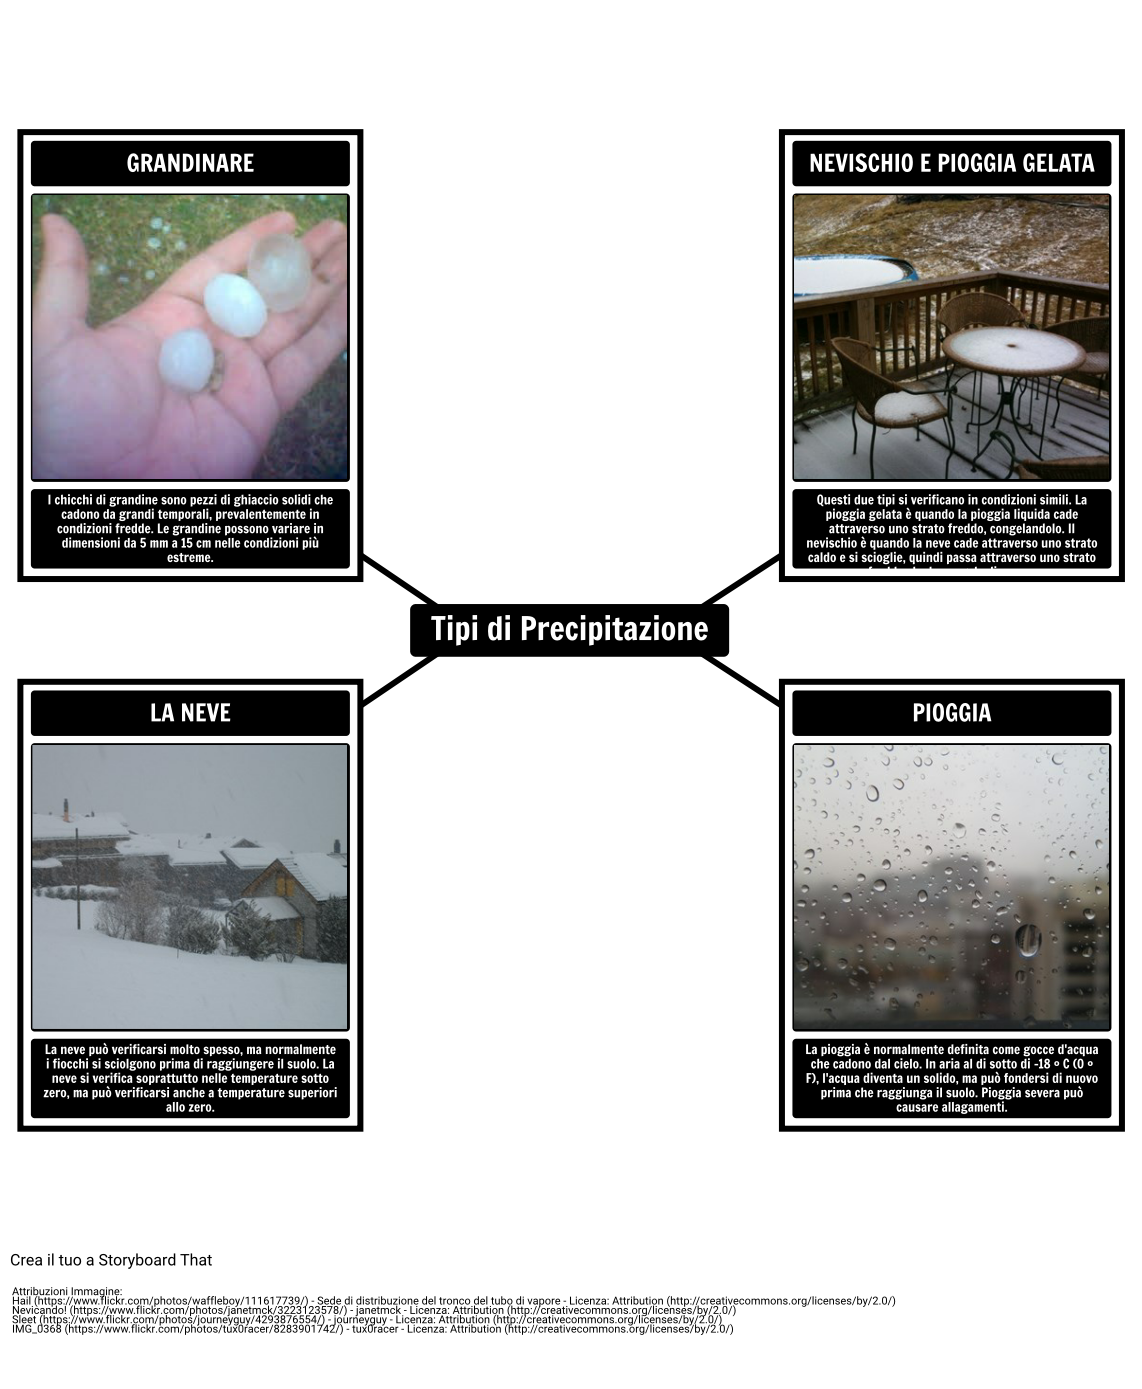 Tipi di Precipitazione